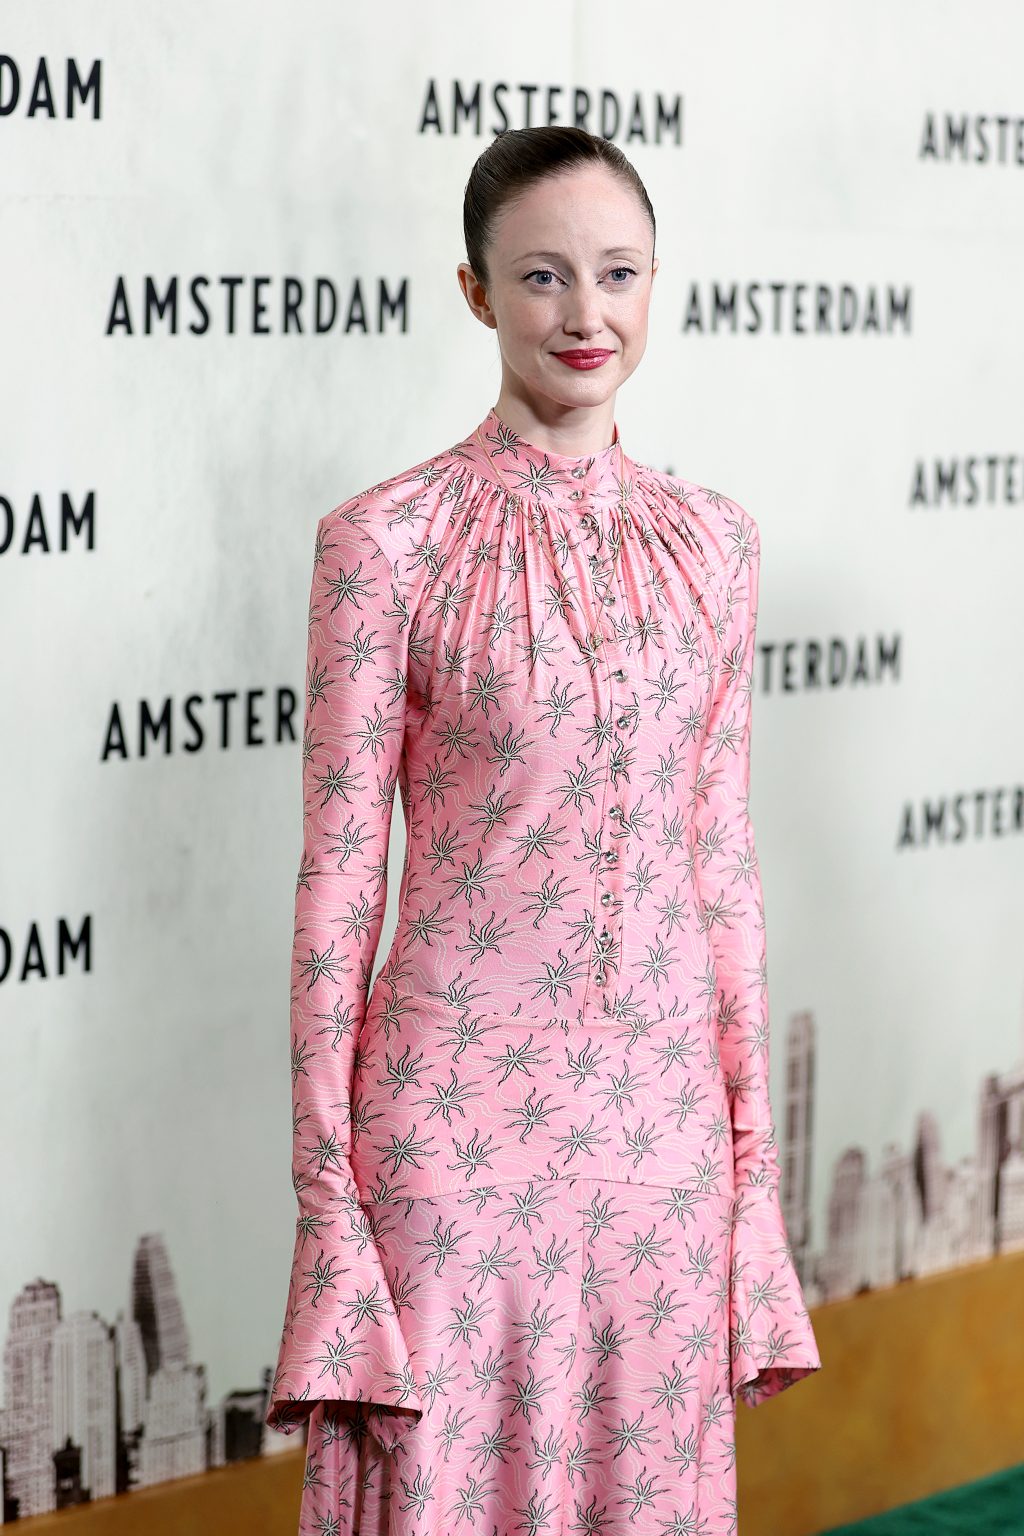 Red Carpet Rundown: World Premiere of “Amsterdam” In New York City ...